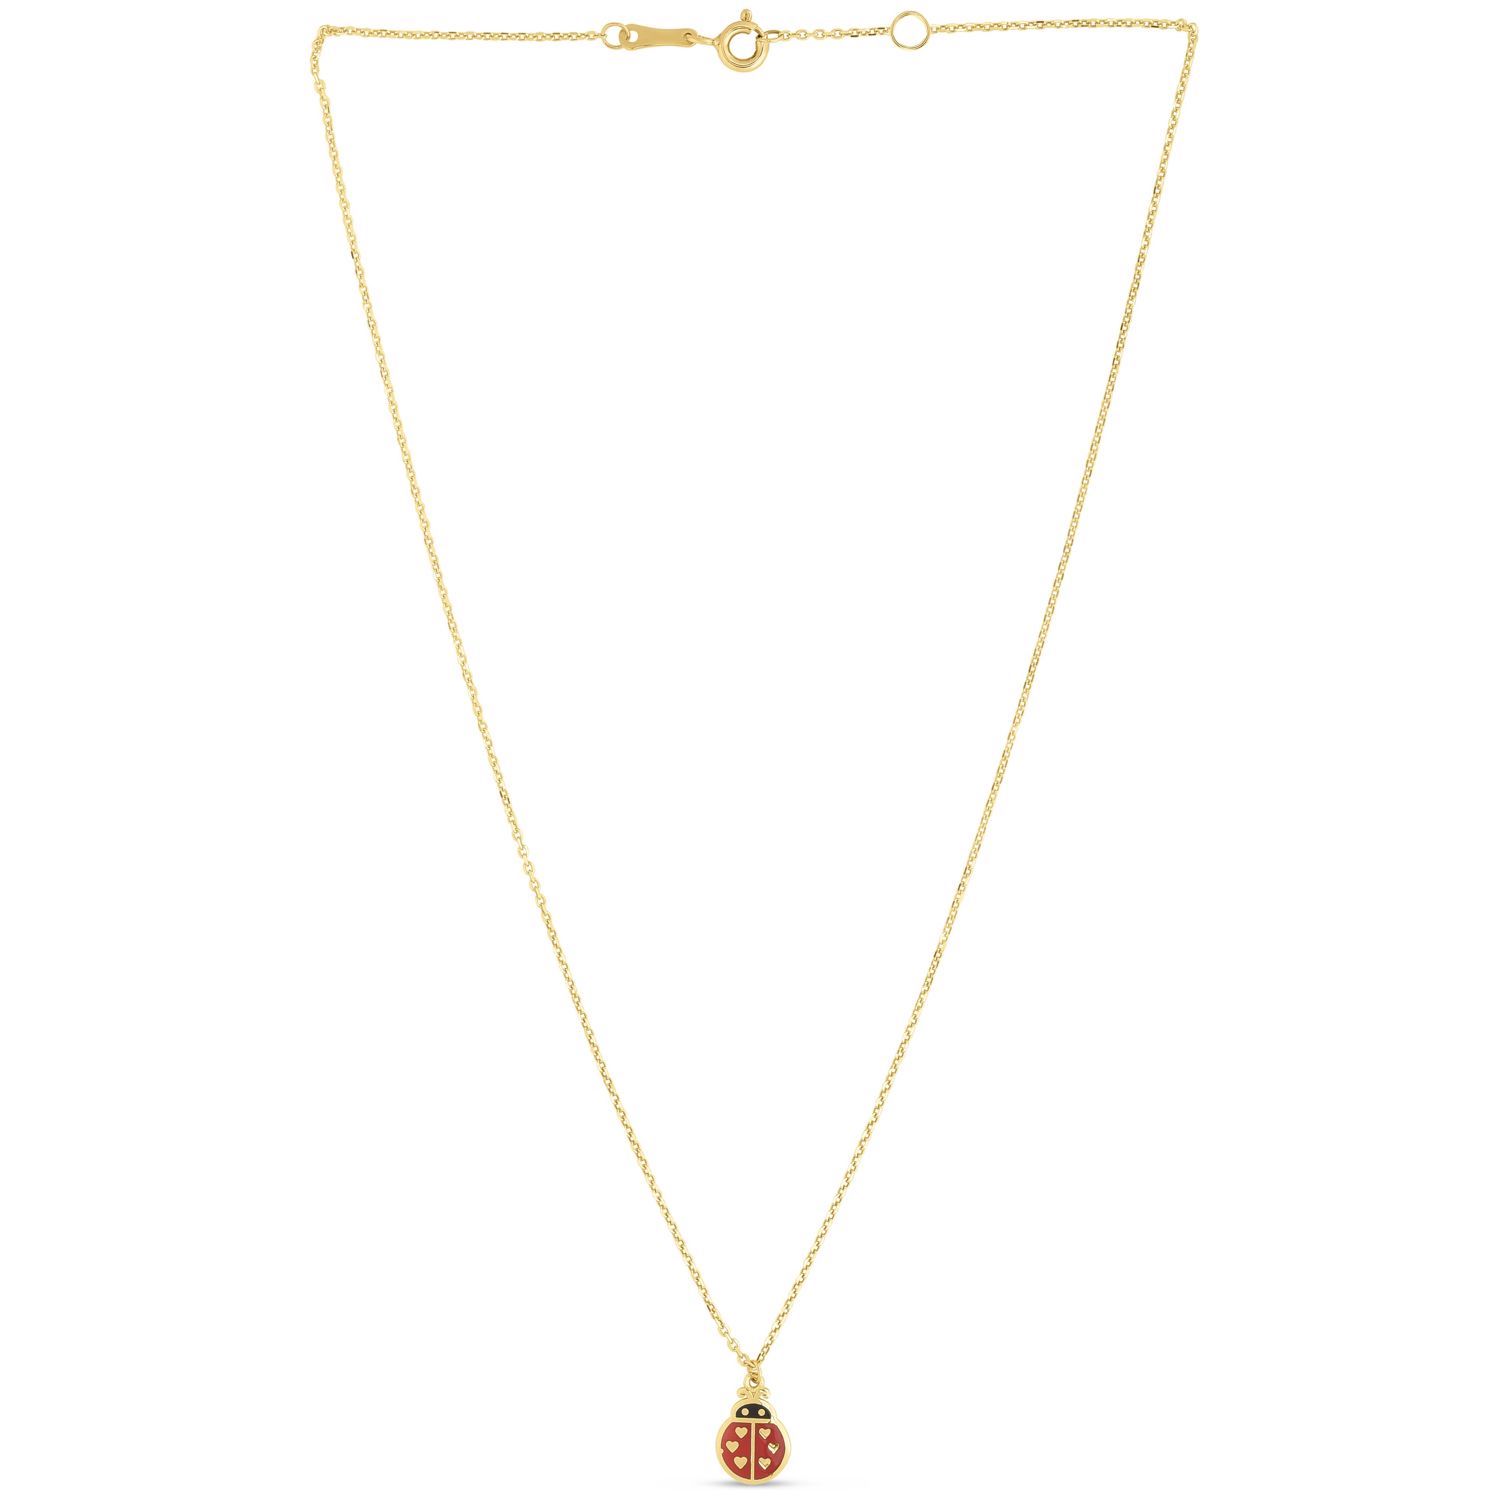 14K Yellow Gold Enamel Ladybug Pendant Cable Chain Necklace 16"-18" Adjustable